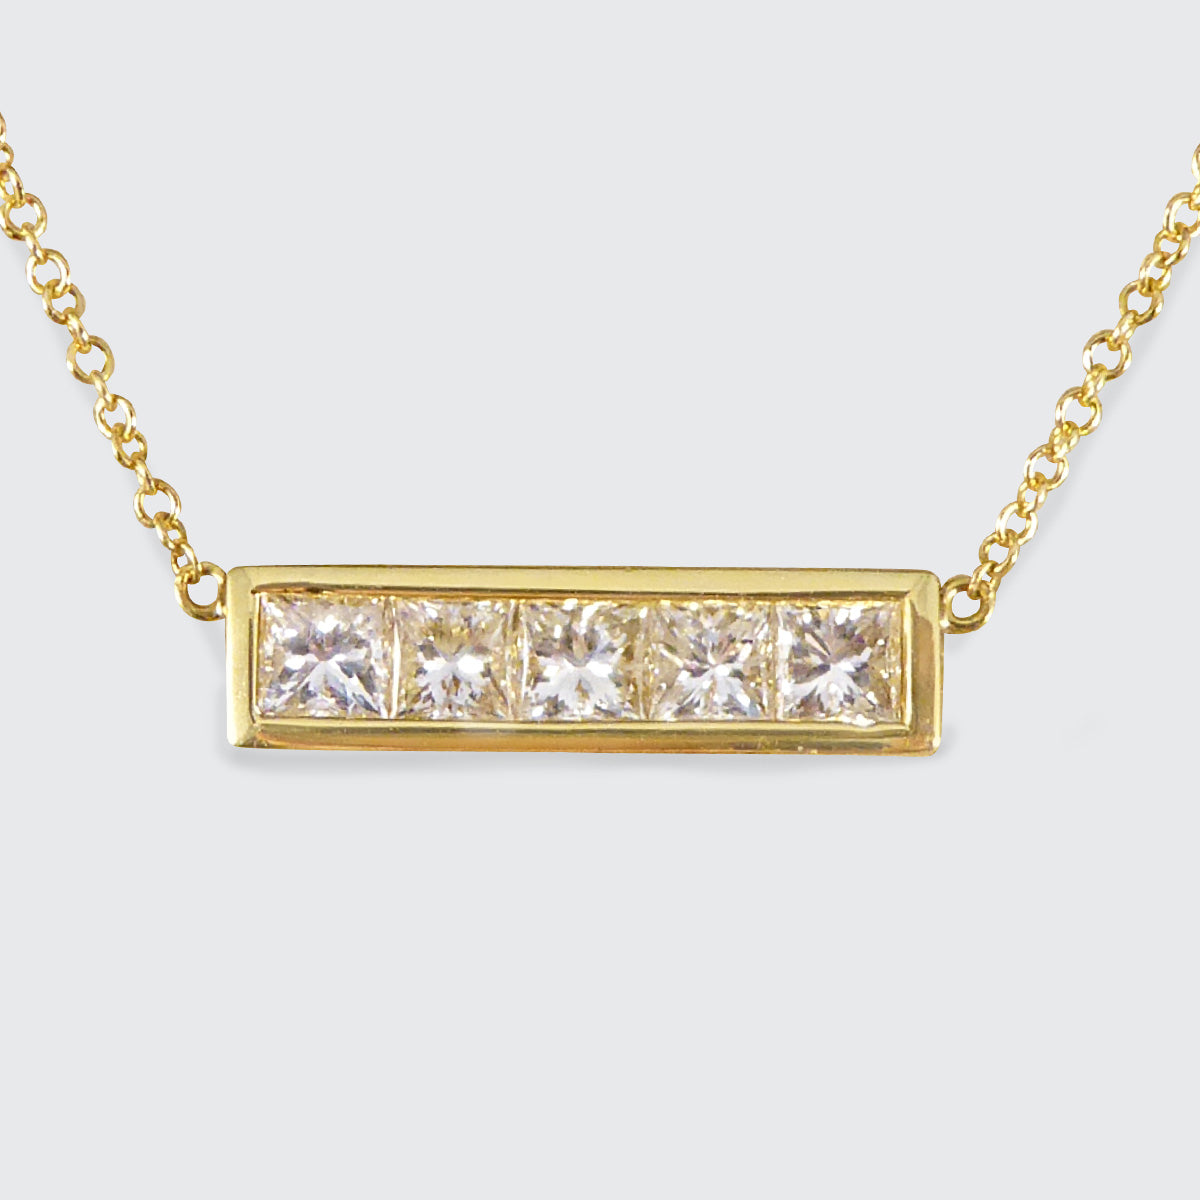 Princess Cut Diamond Bar Necklace in 18ct Yellow Gold